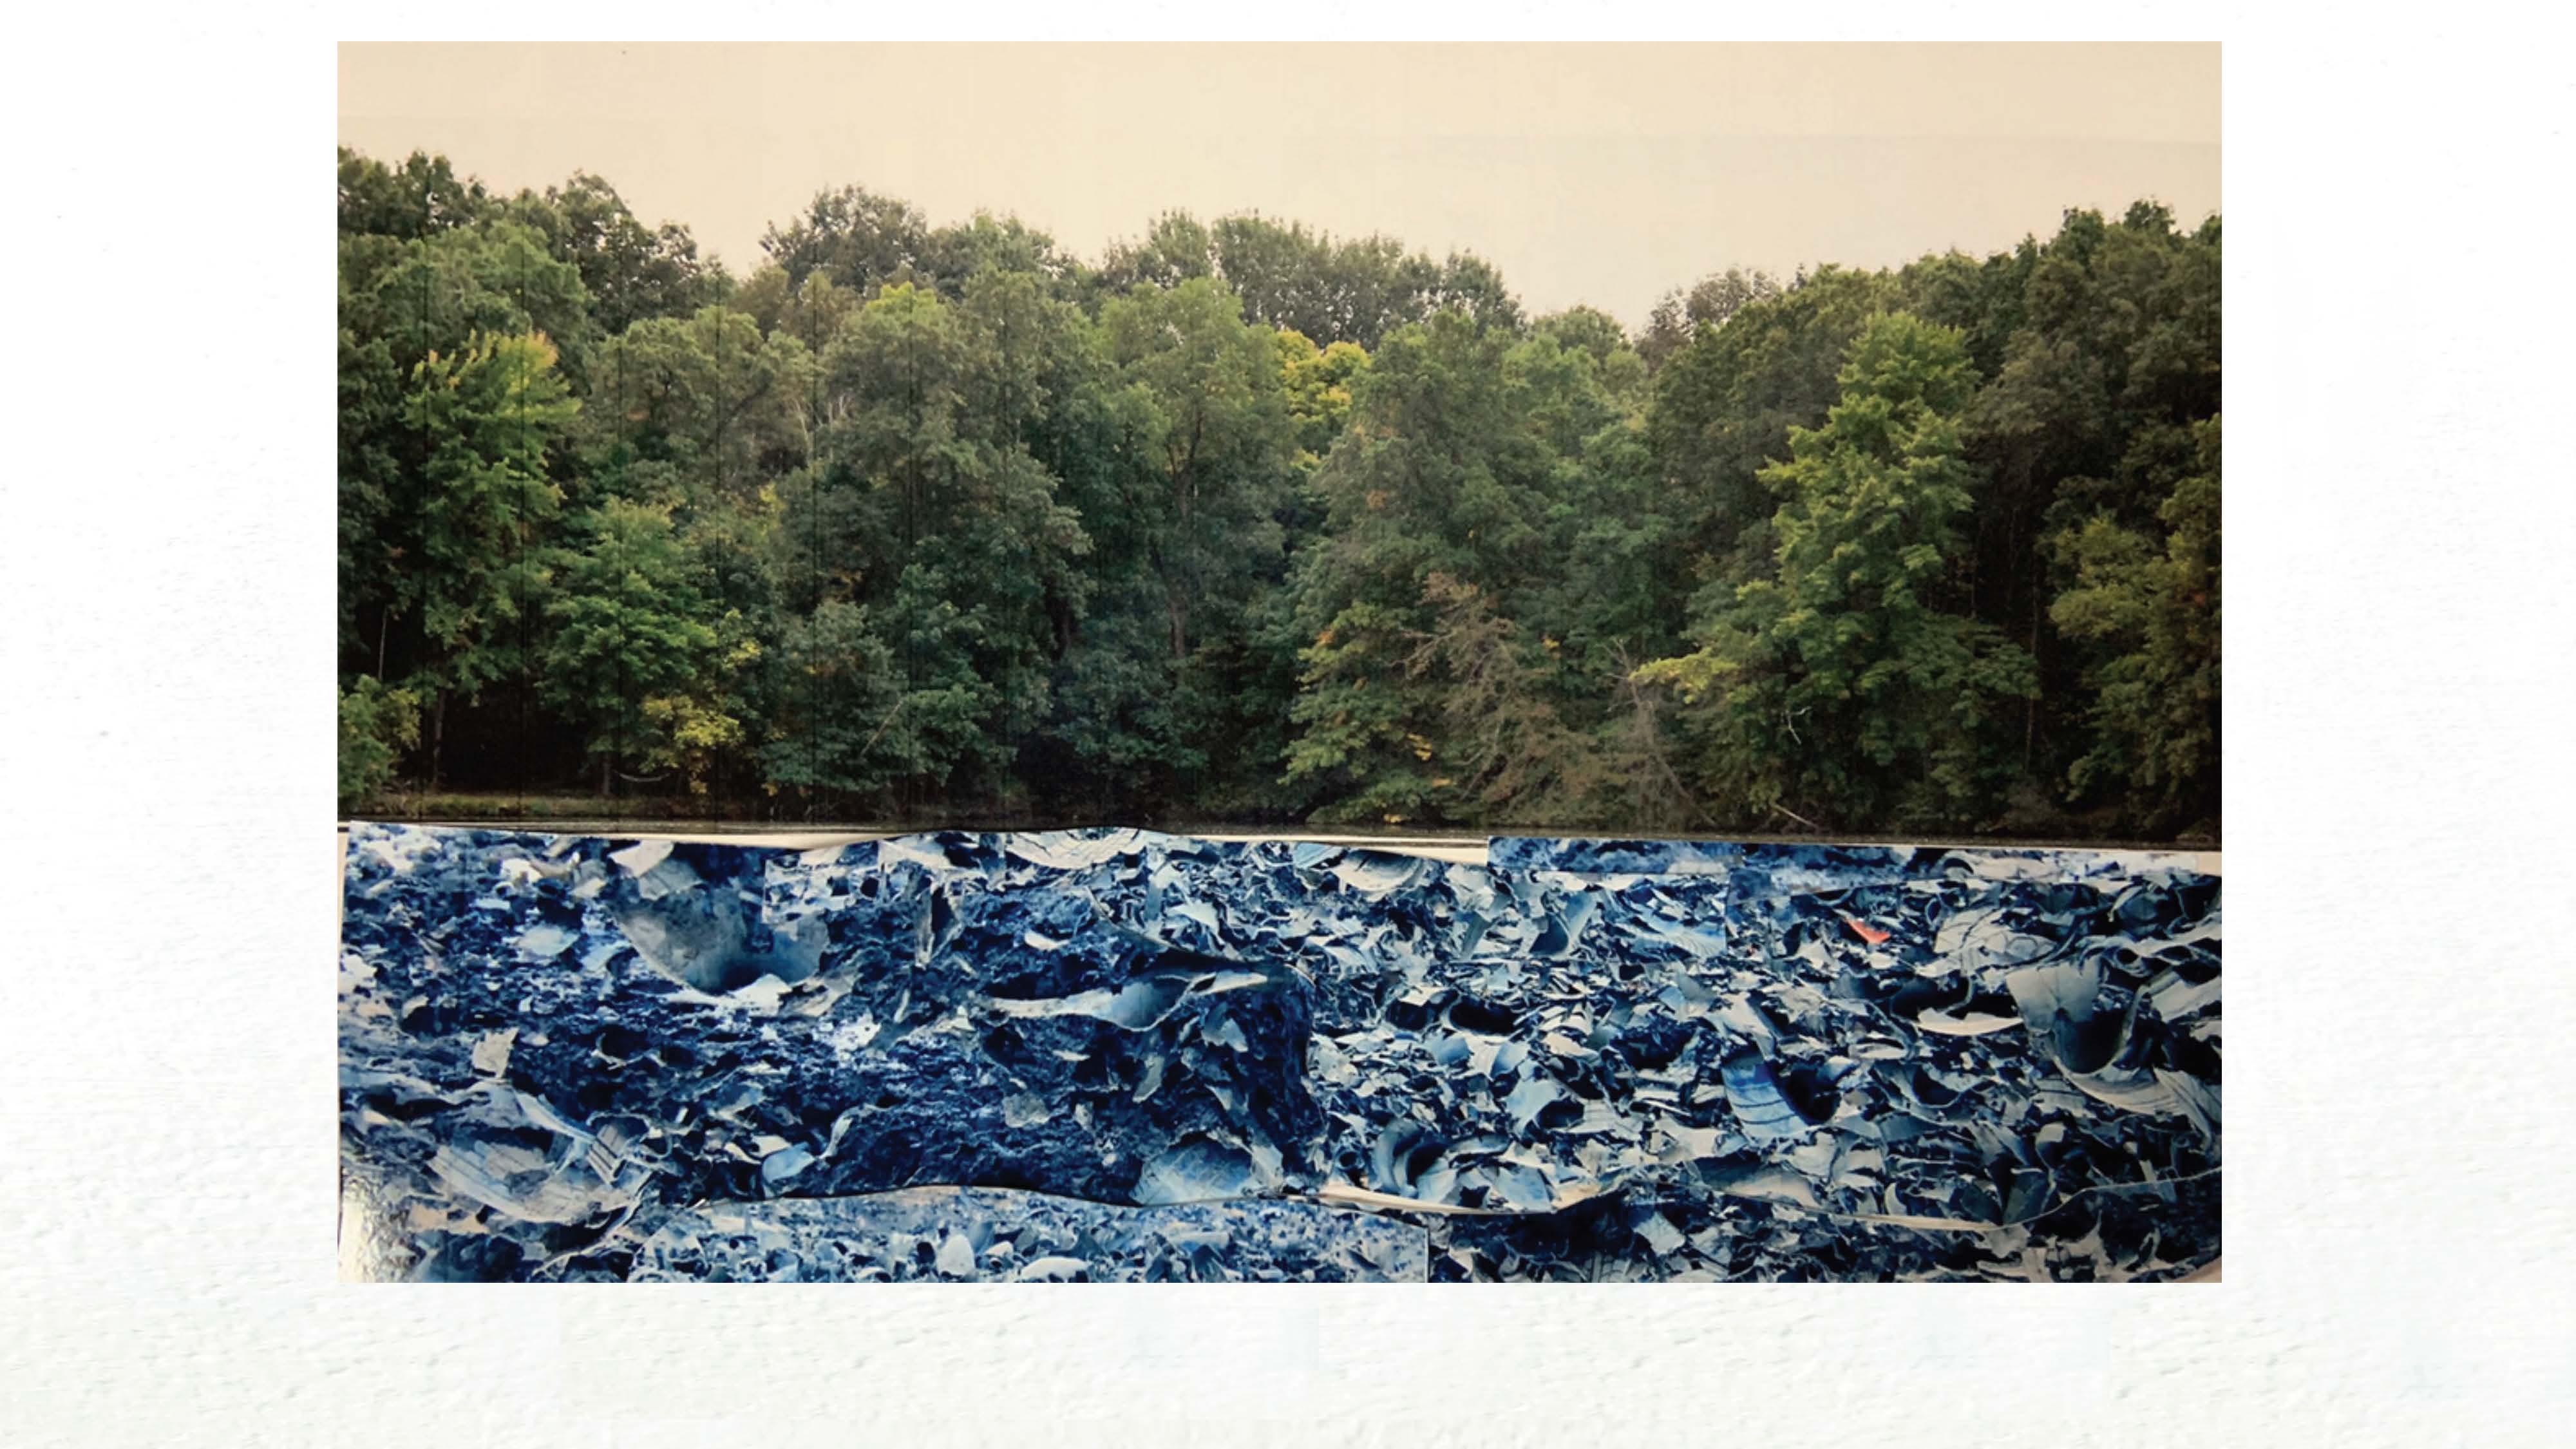 Kimberly Bryan. “Nature vs. Trash (I)”, photograph, photoshop collage, 2021.